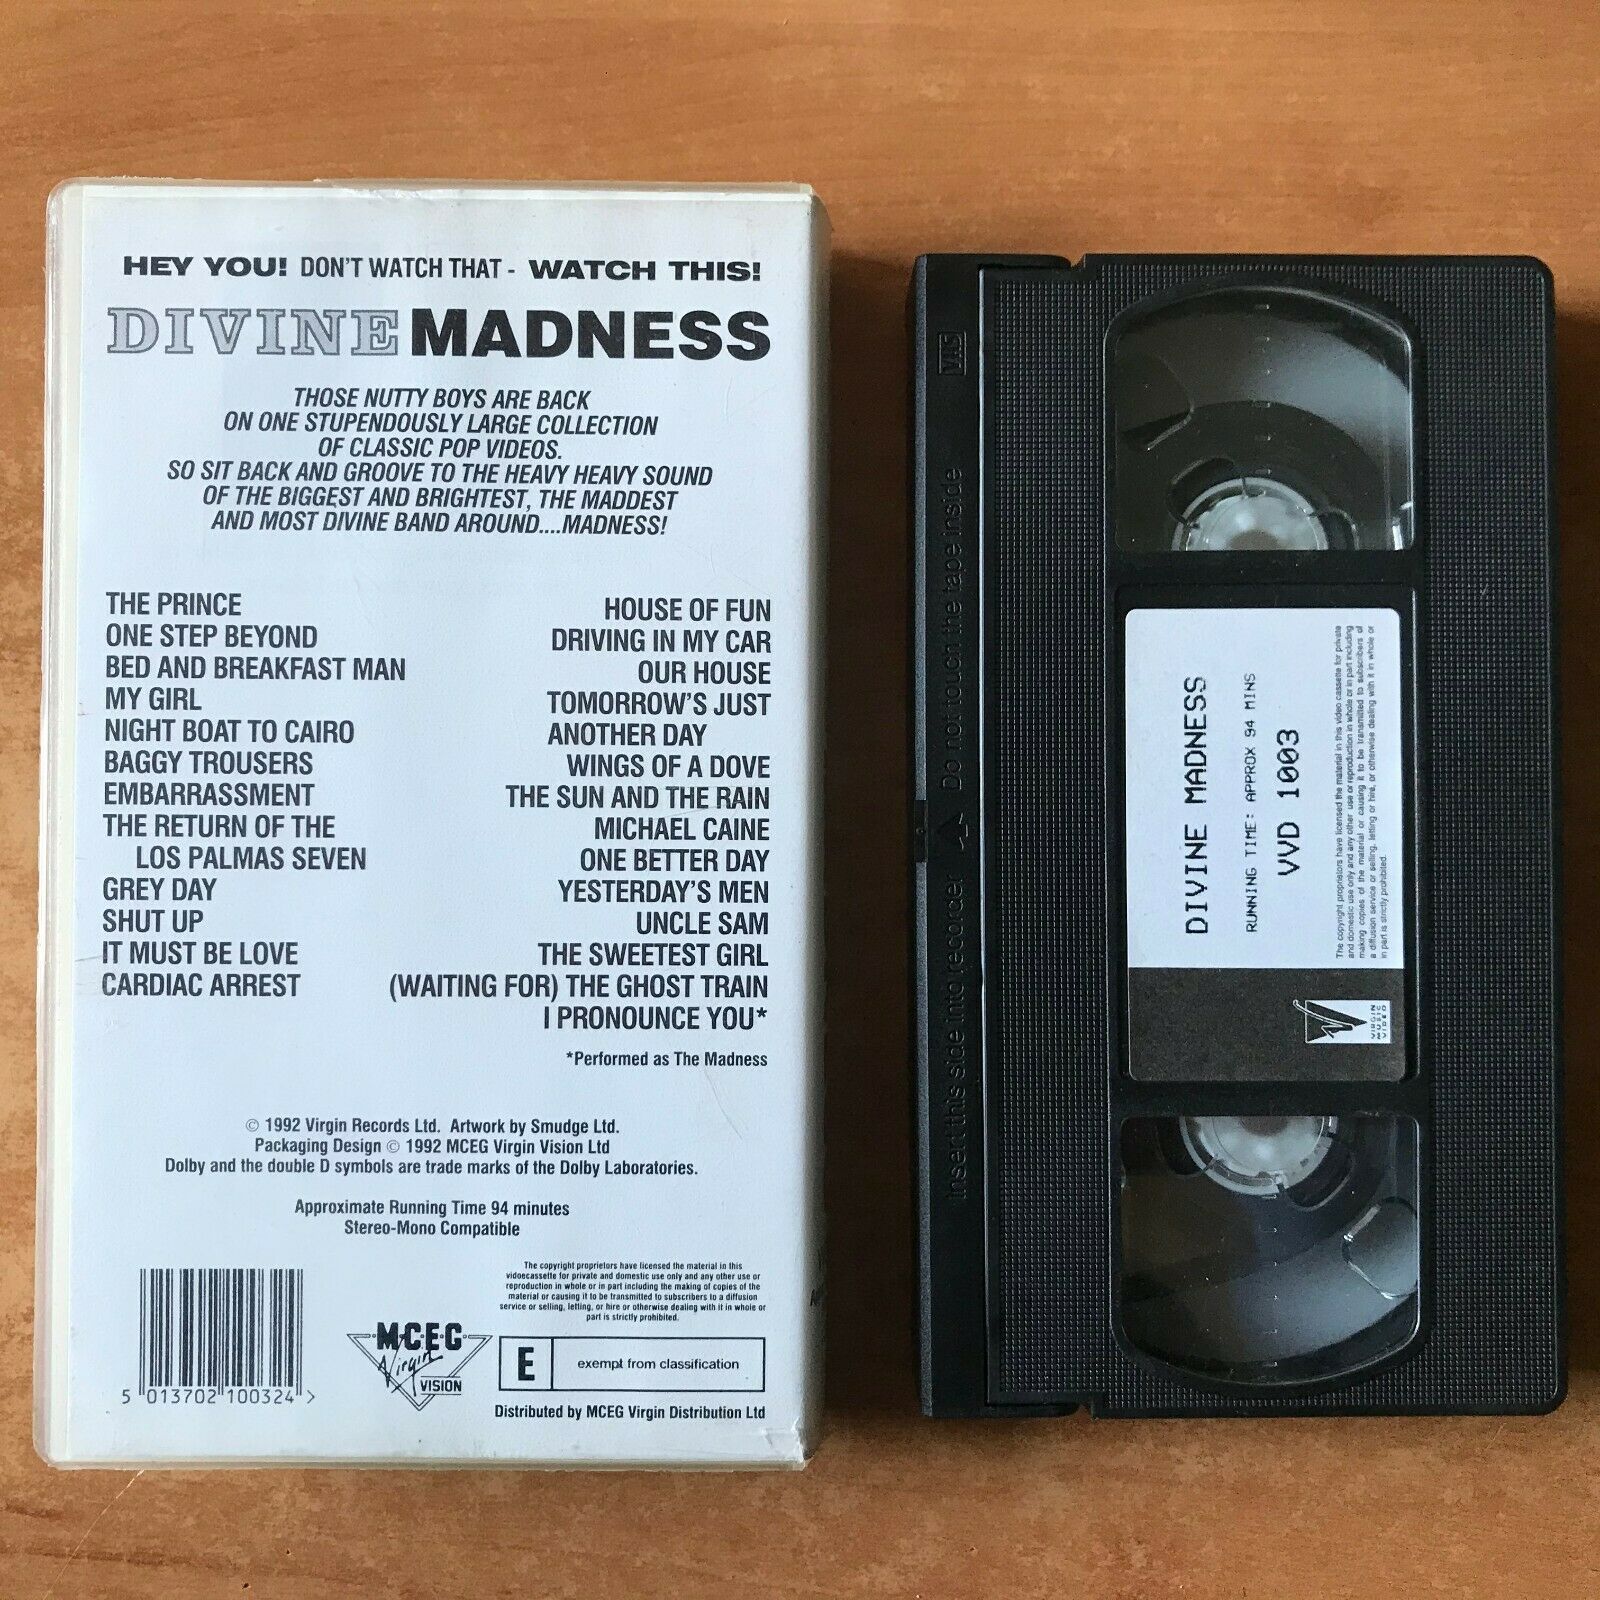 Divine Madness: 25 Legendary Videos - 'One Step Beyond' - Pop Music - Pal VHS-